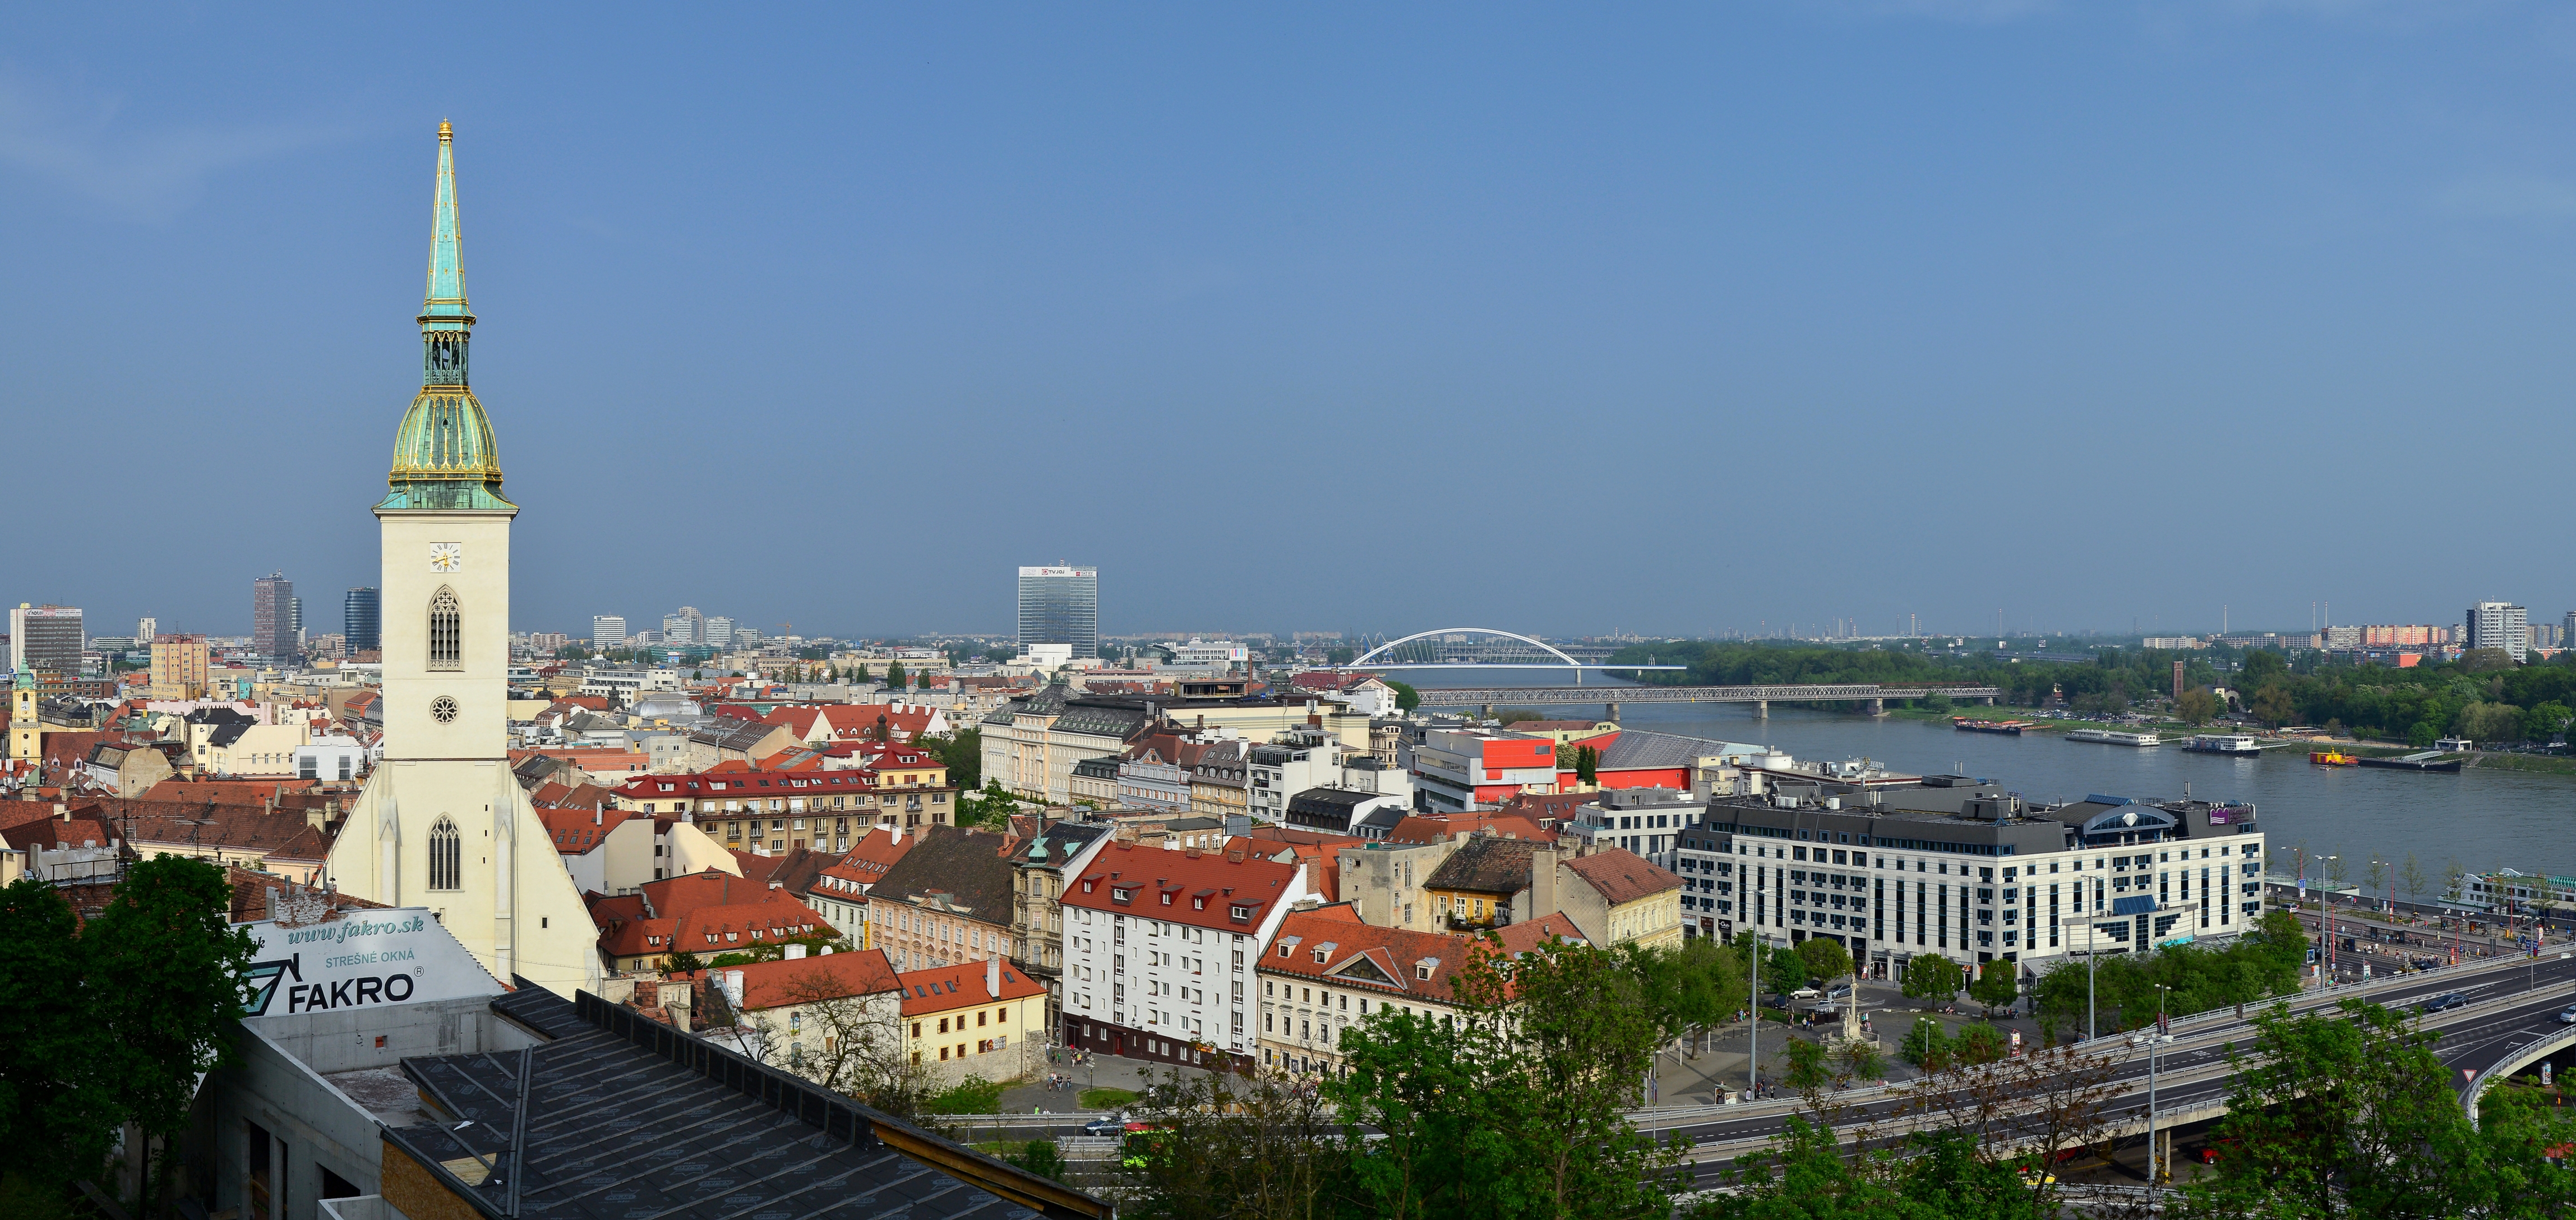 Bratislava (Pressburg, Pozsony) - panorama